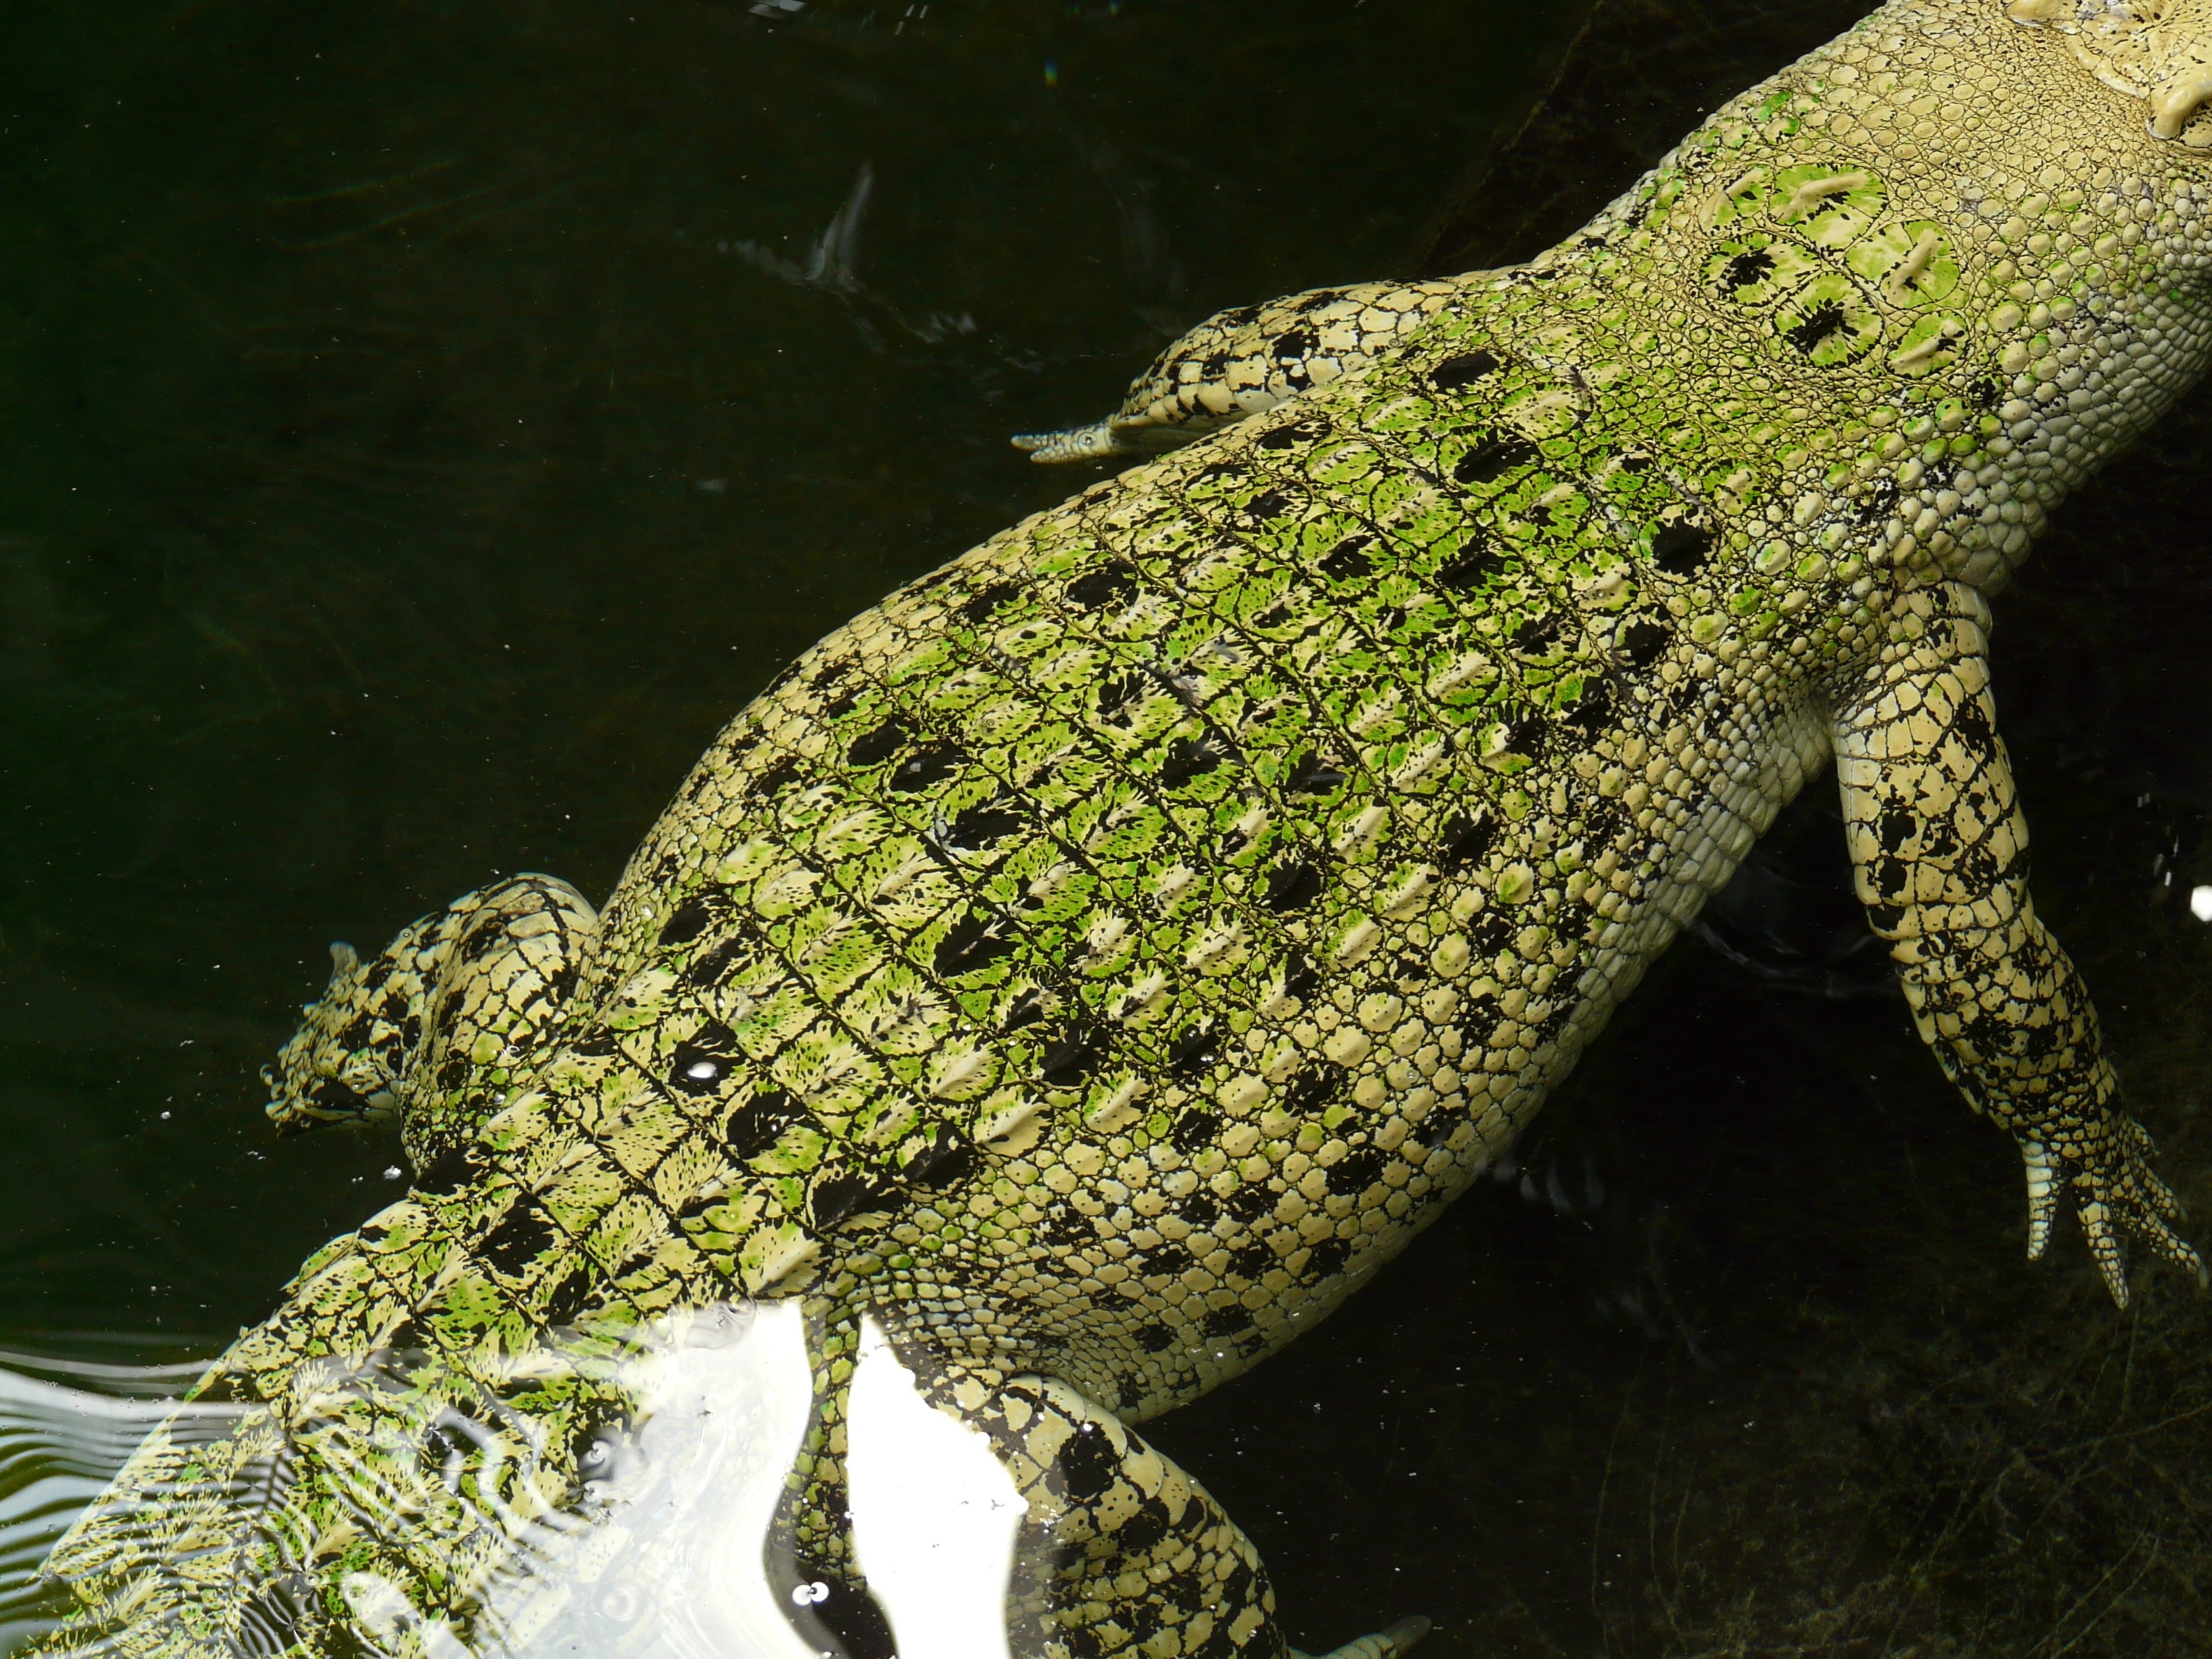 green alligator